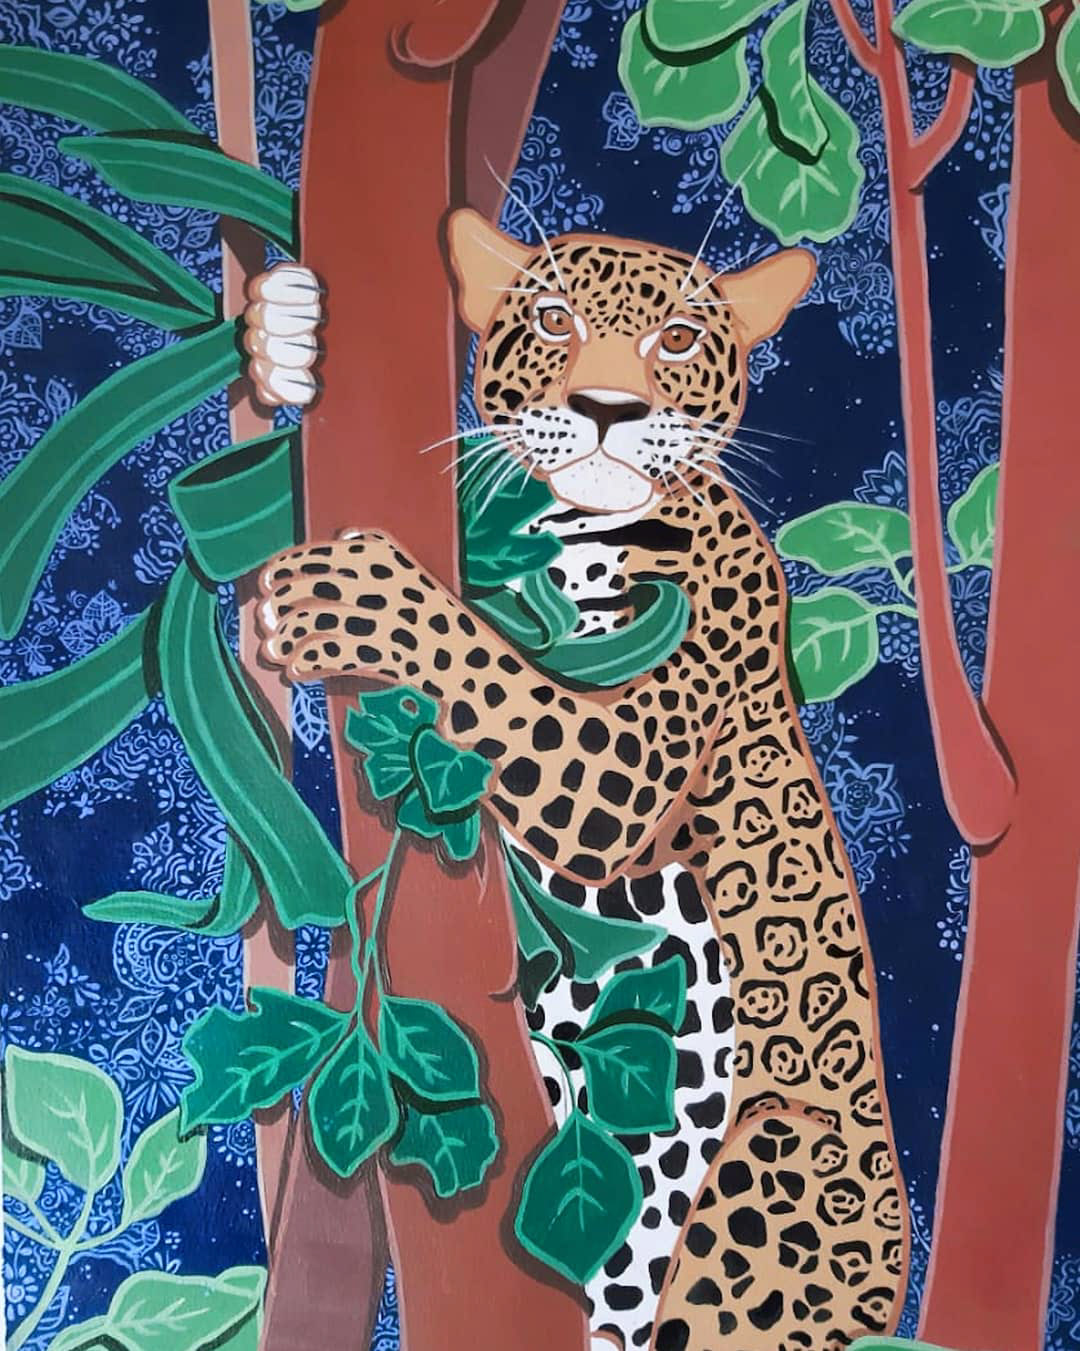 acrylic acryliccolors acrylicpainting leopardillustration leopardprint wildlife wildlifepainting